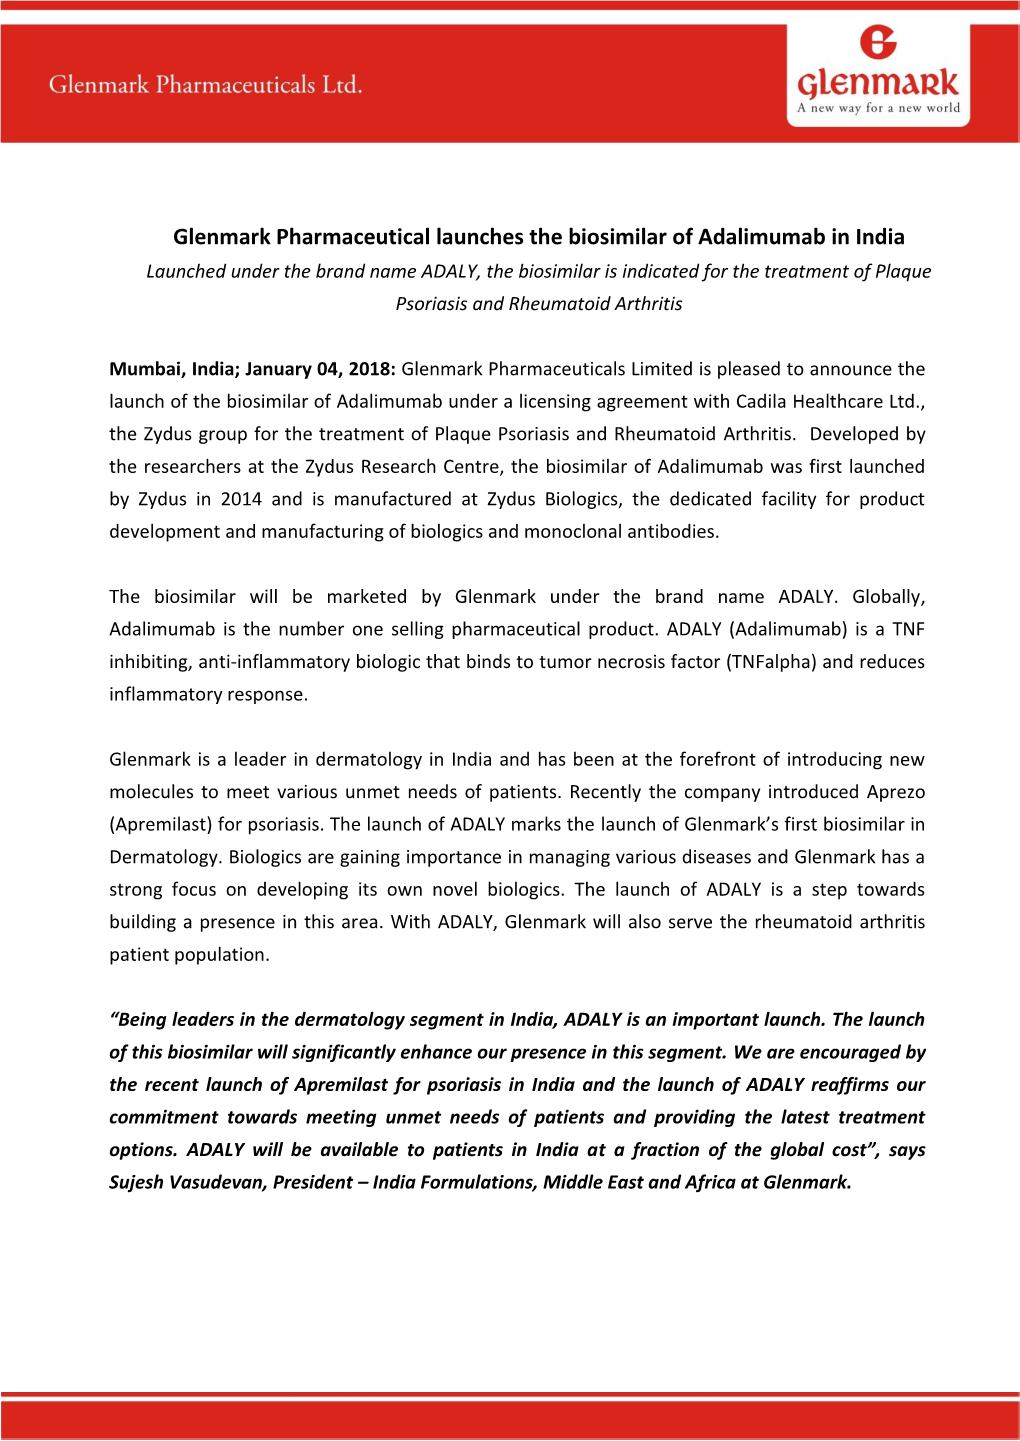 Glenmark Pharmaceutical Launches the Biosimilar of Adalimumab